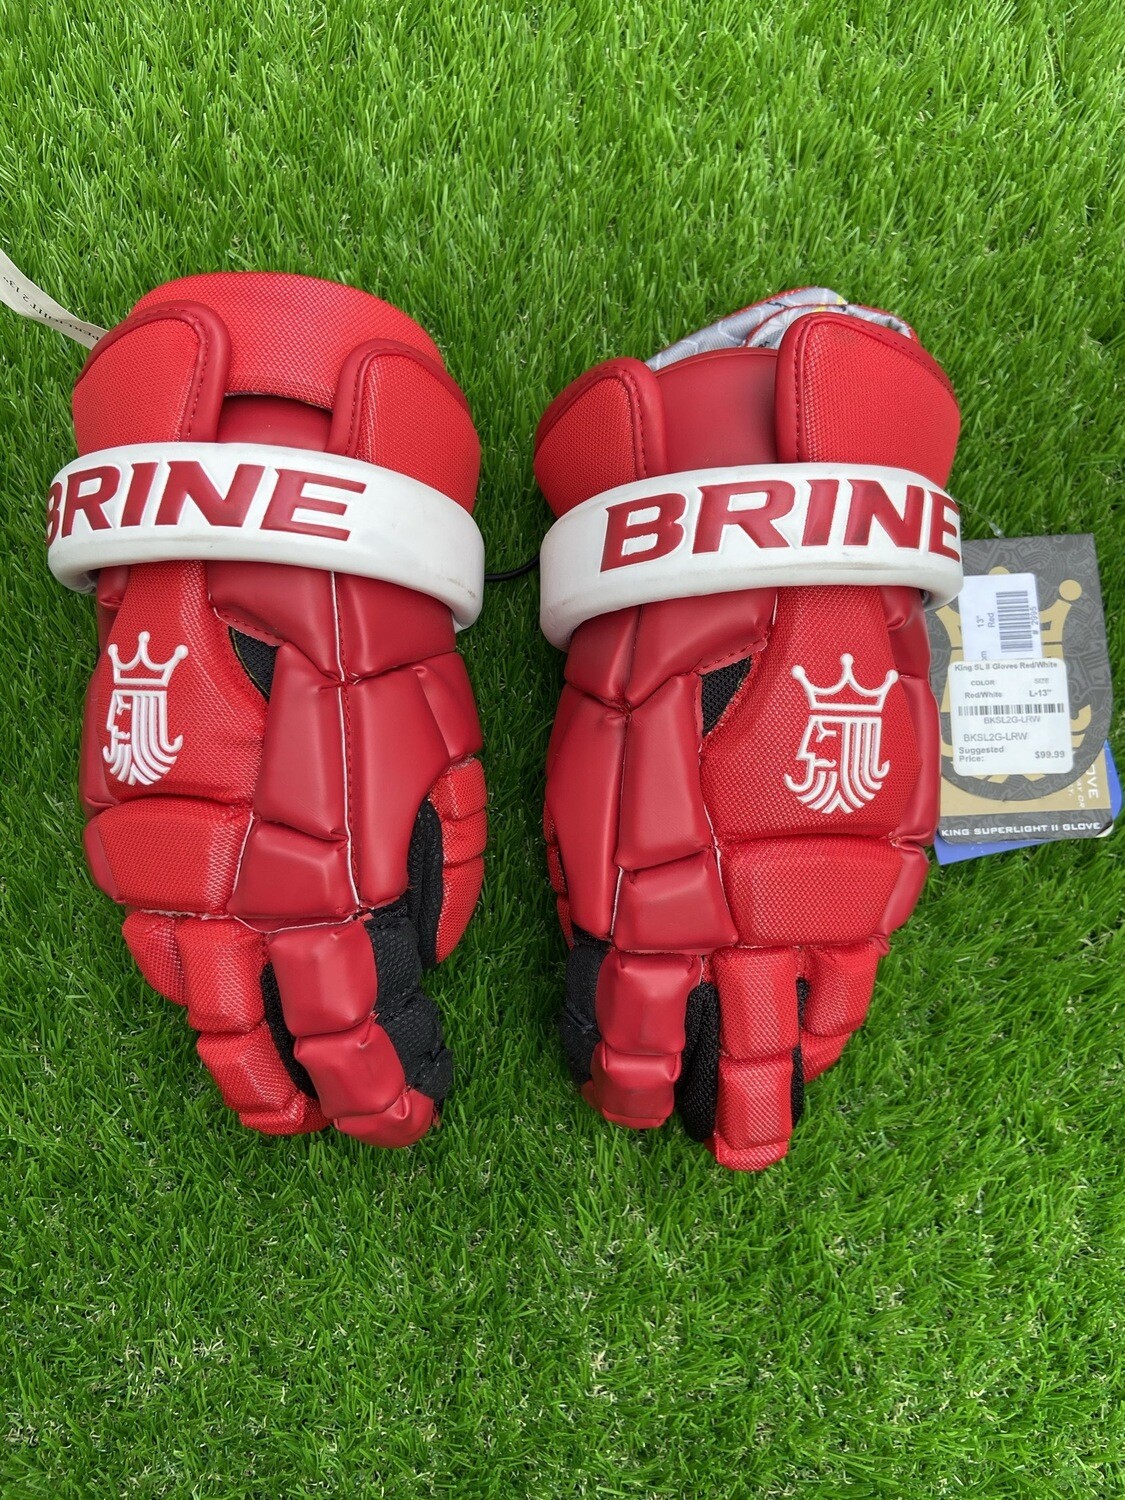 Brine King Superlight 2 Lacrosse Gloves - Red size 13